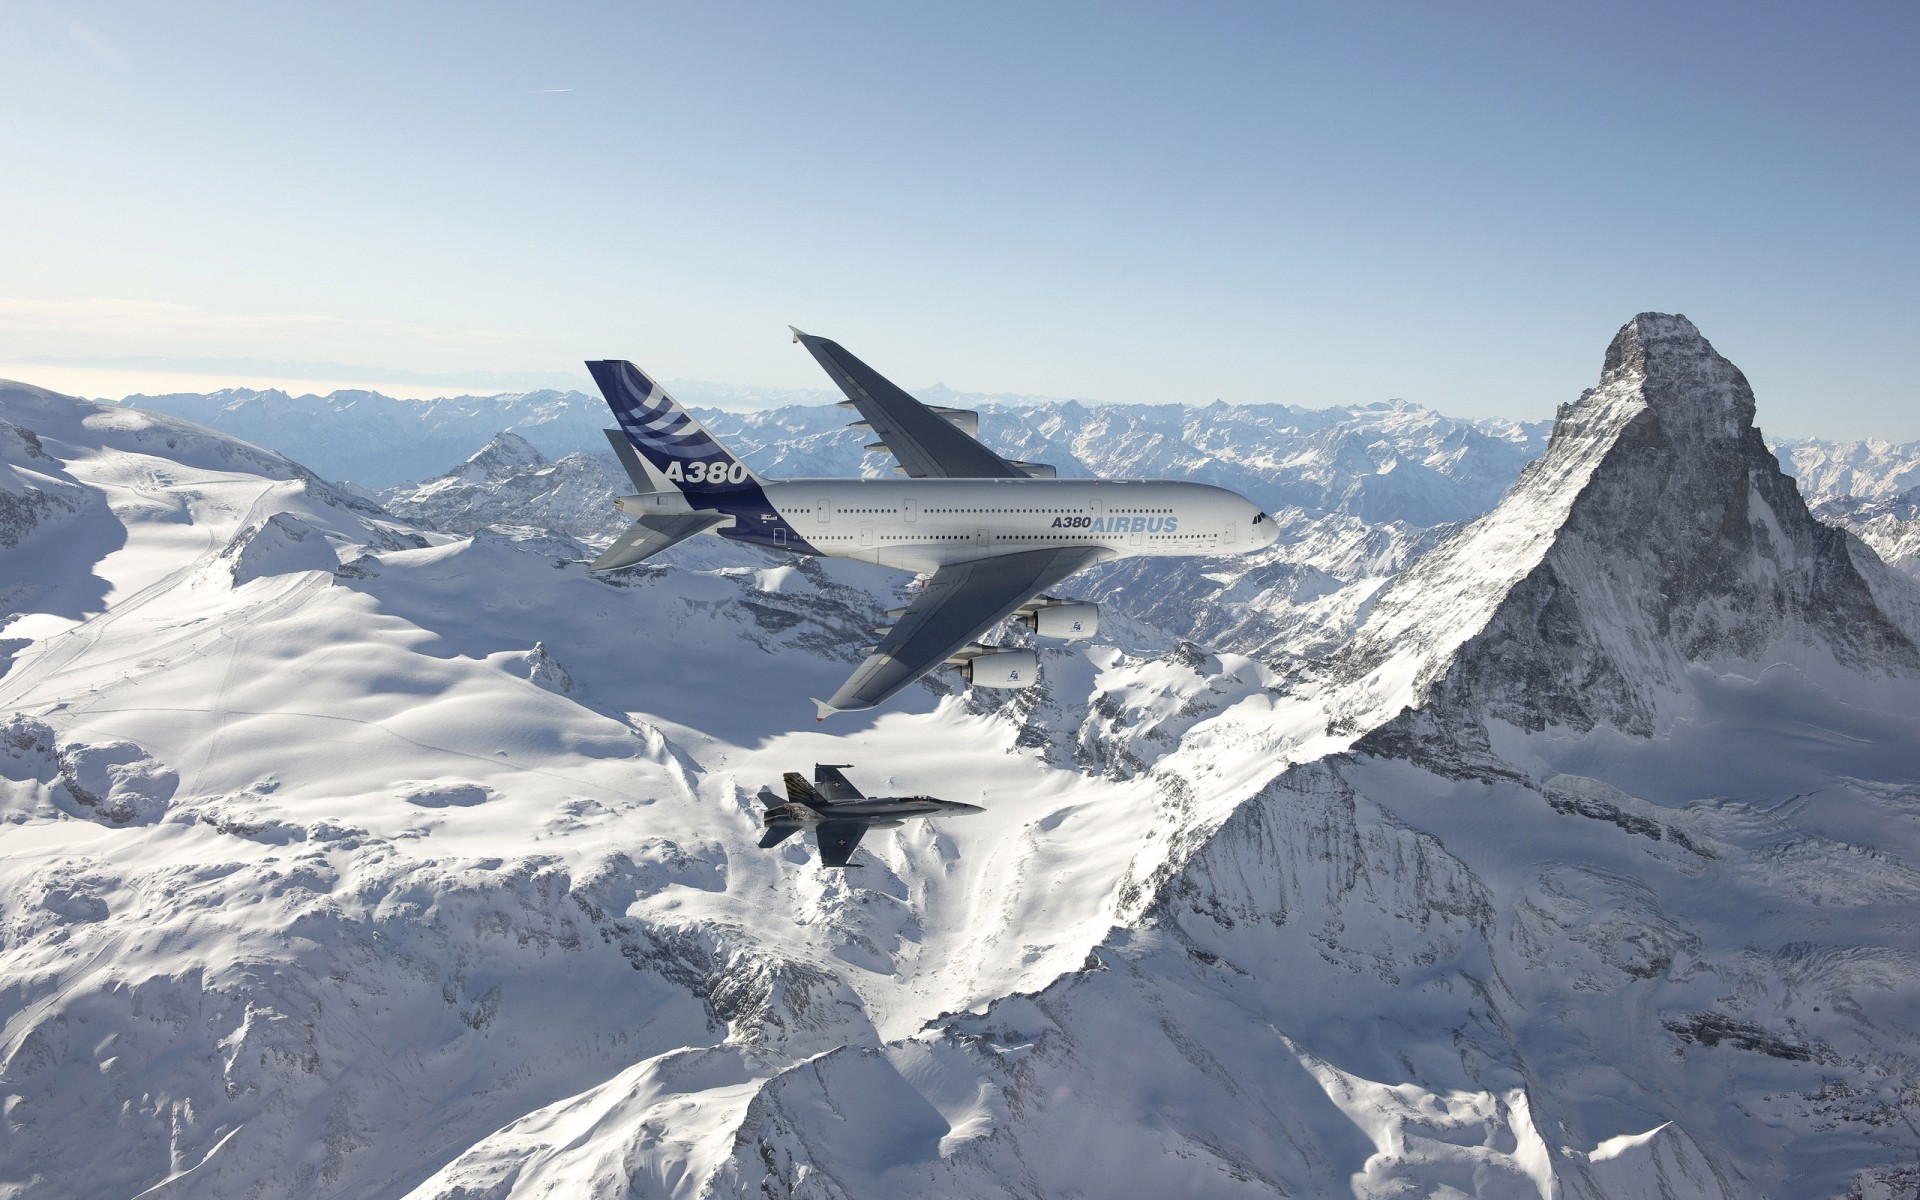 landscapes snow mountain winter ice mountain peak cold glacier travel landscape altitude mountains aircraft airplane